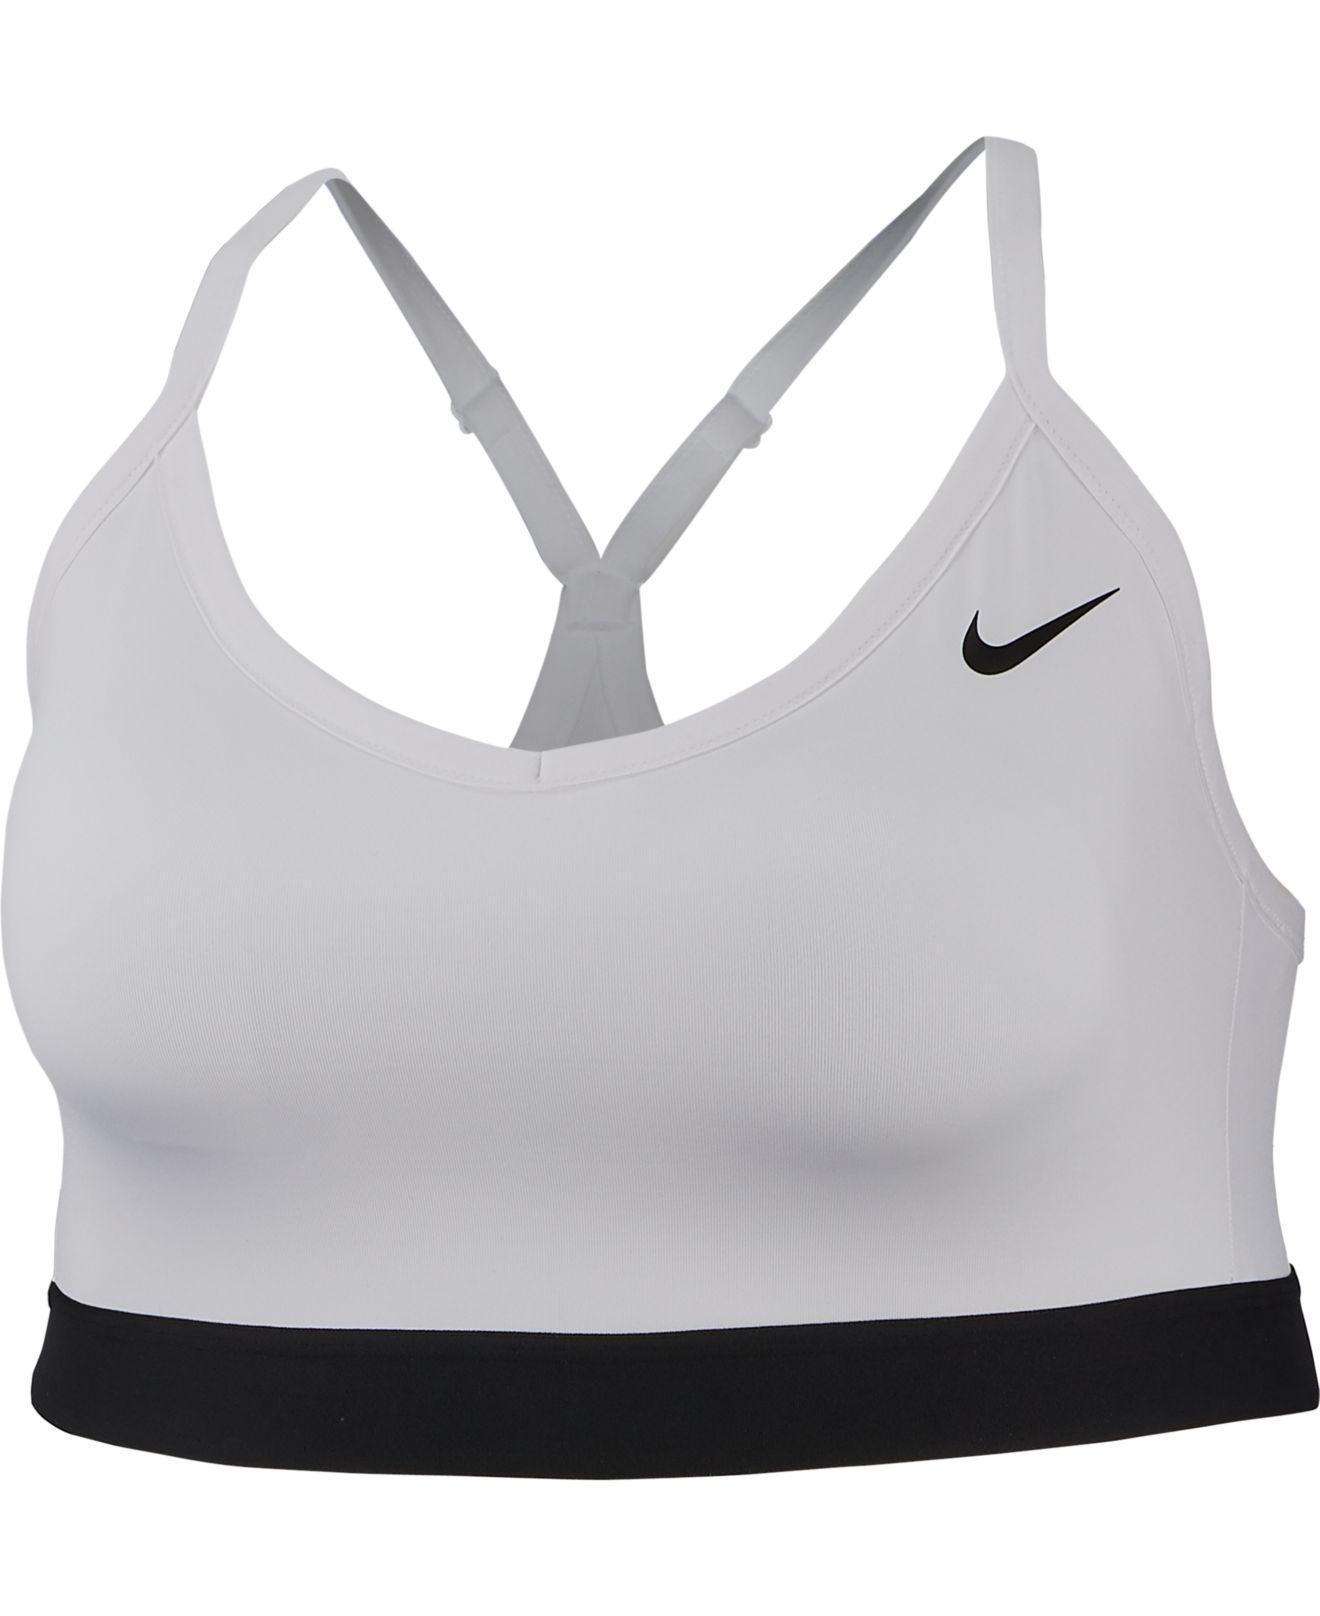 Lyst - Nike Plus Size Indy Dri-fit Low-impact Sports Bra in White